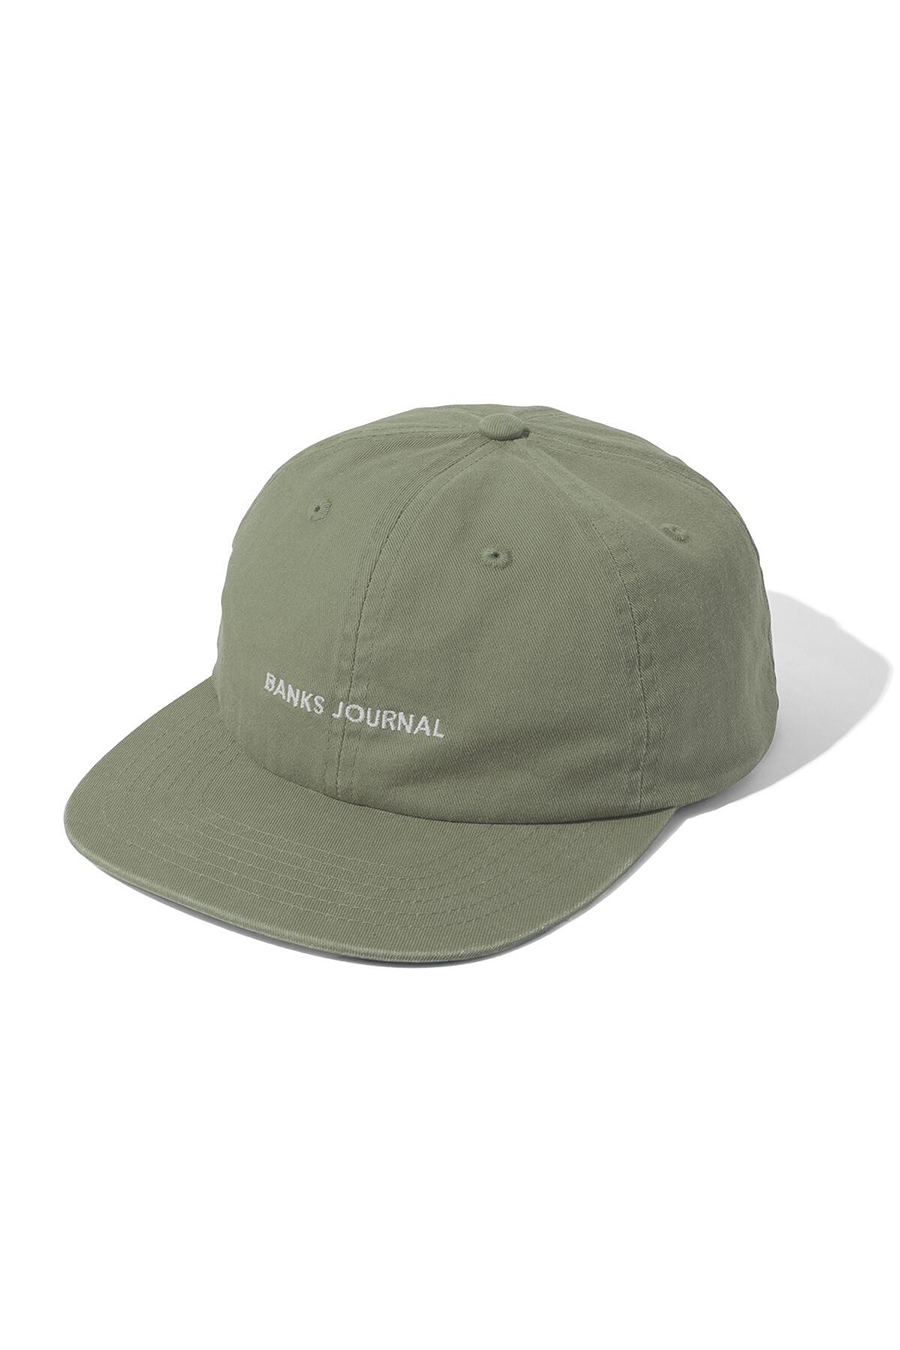 Label Hat | Green Tea - Main Image Number 1 of 1